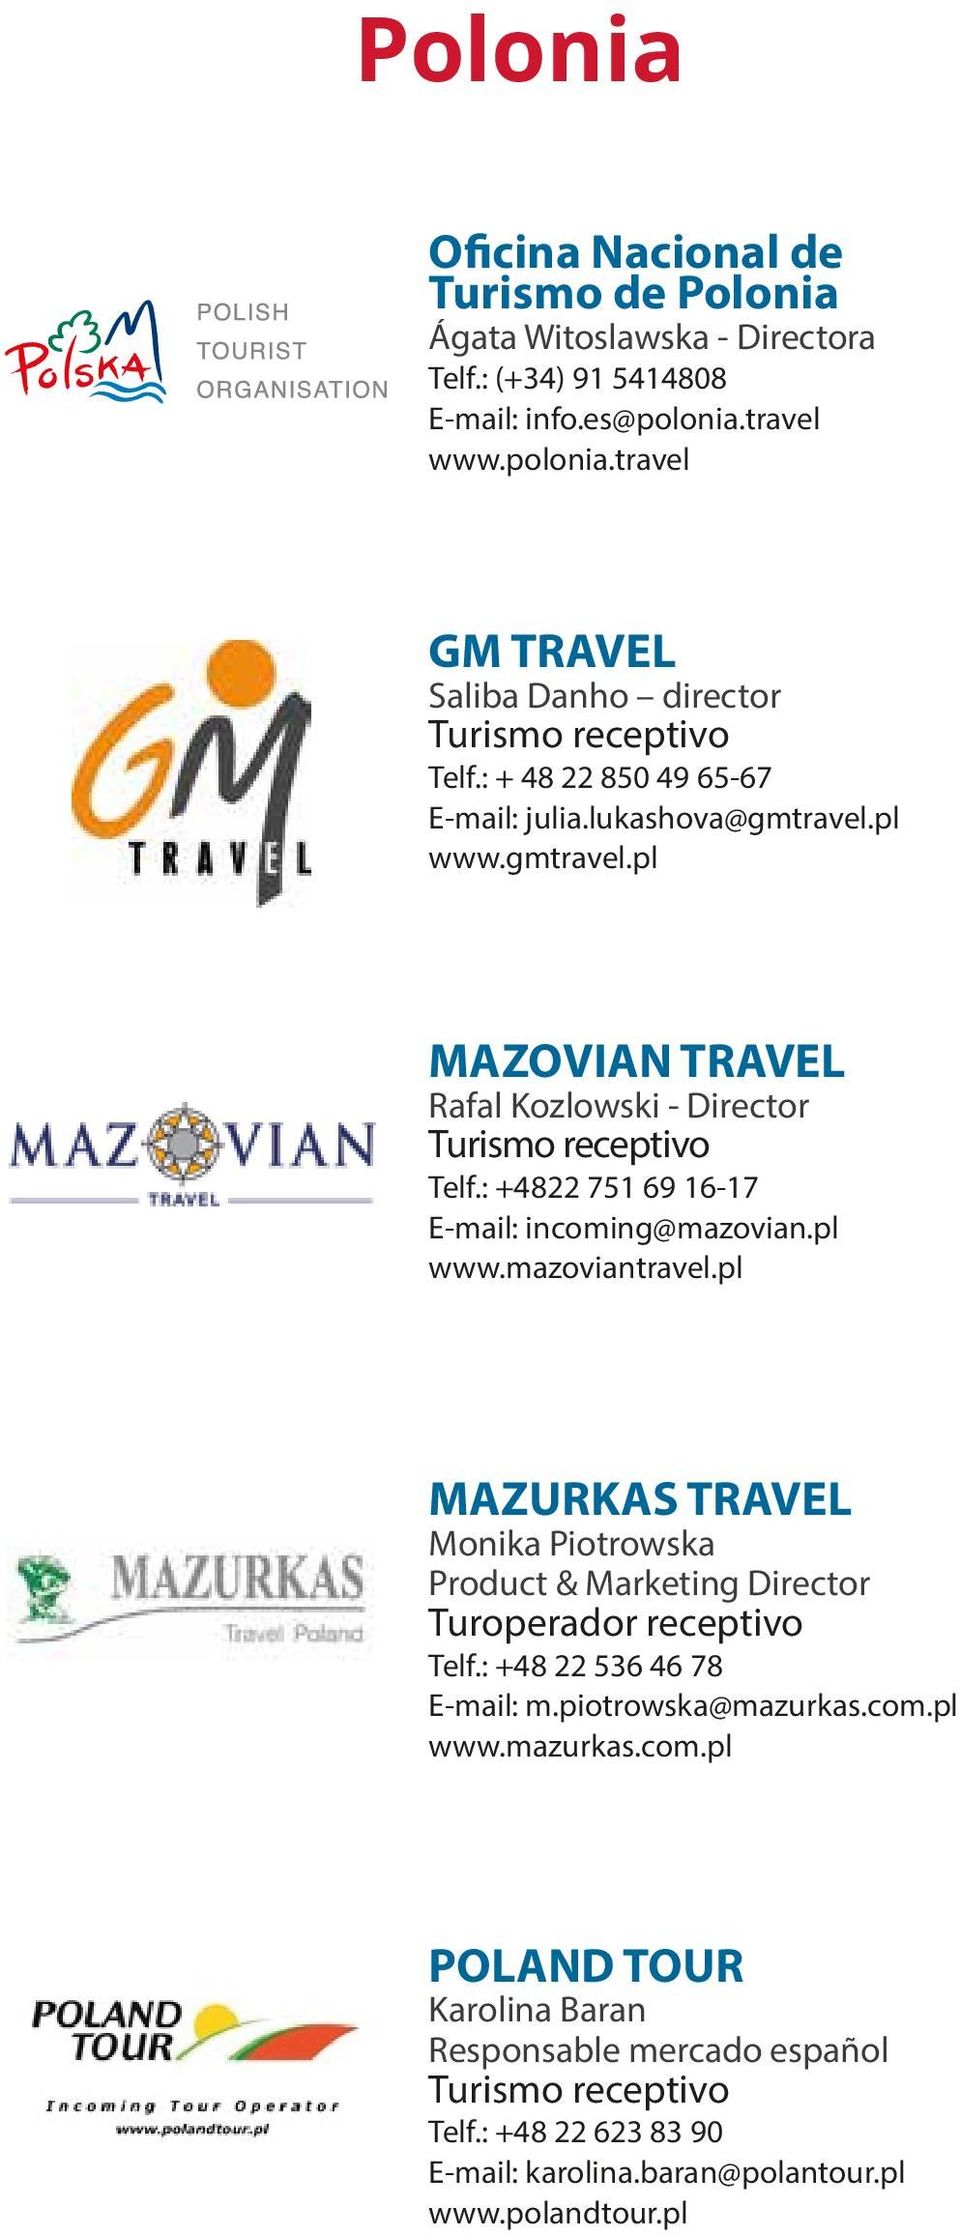 pl www.gmtravel.pl MAZOVIAN TRAVEL Rafal Kozlowski - Director Turismo receptivo Telf.: +4822 751 69 16-17 E-mail: incoming@mazovian.pl www.mazoviantravel.